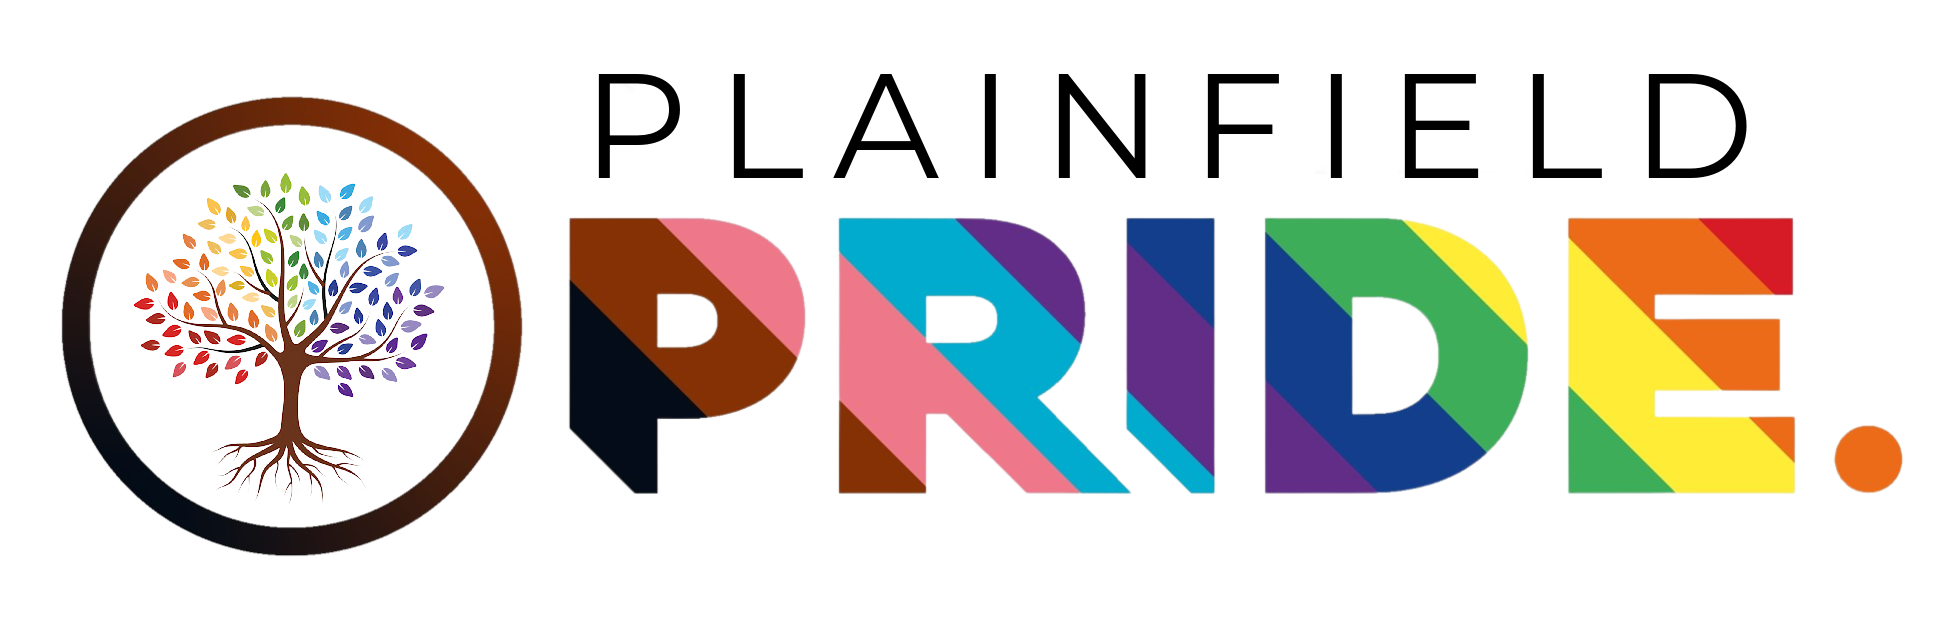 Plainfield Pride logo